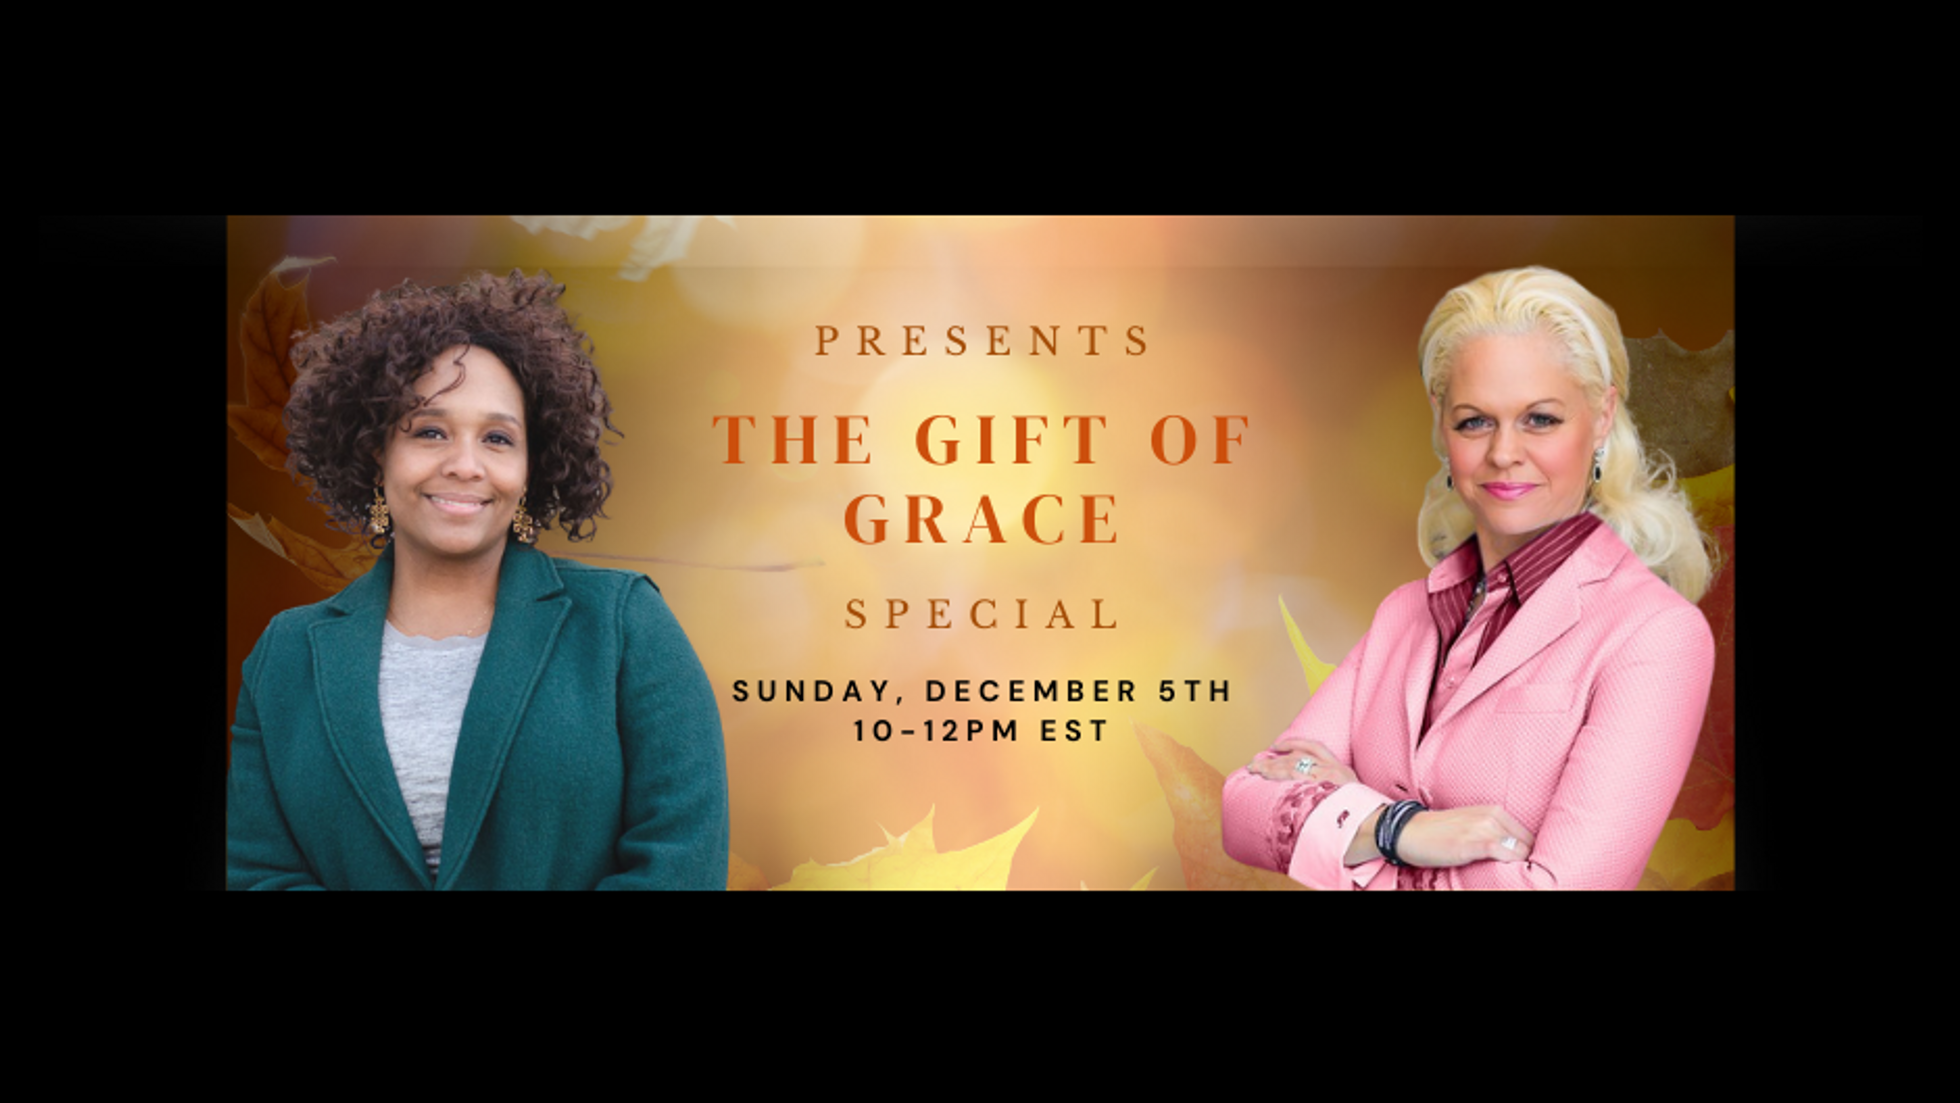 Gift of Grace